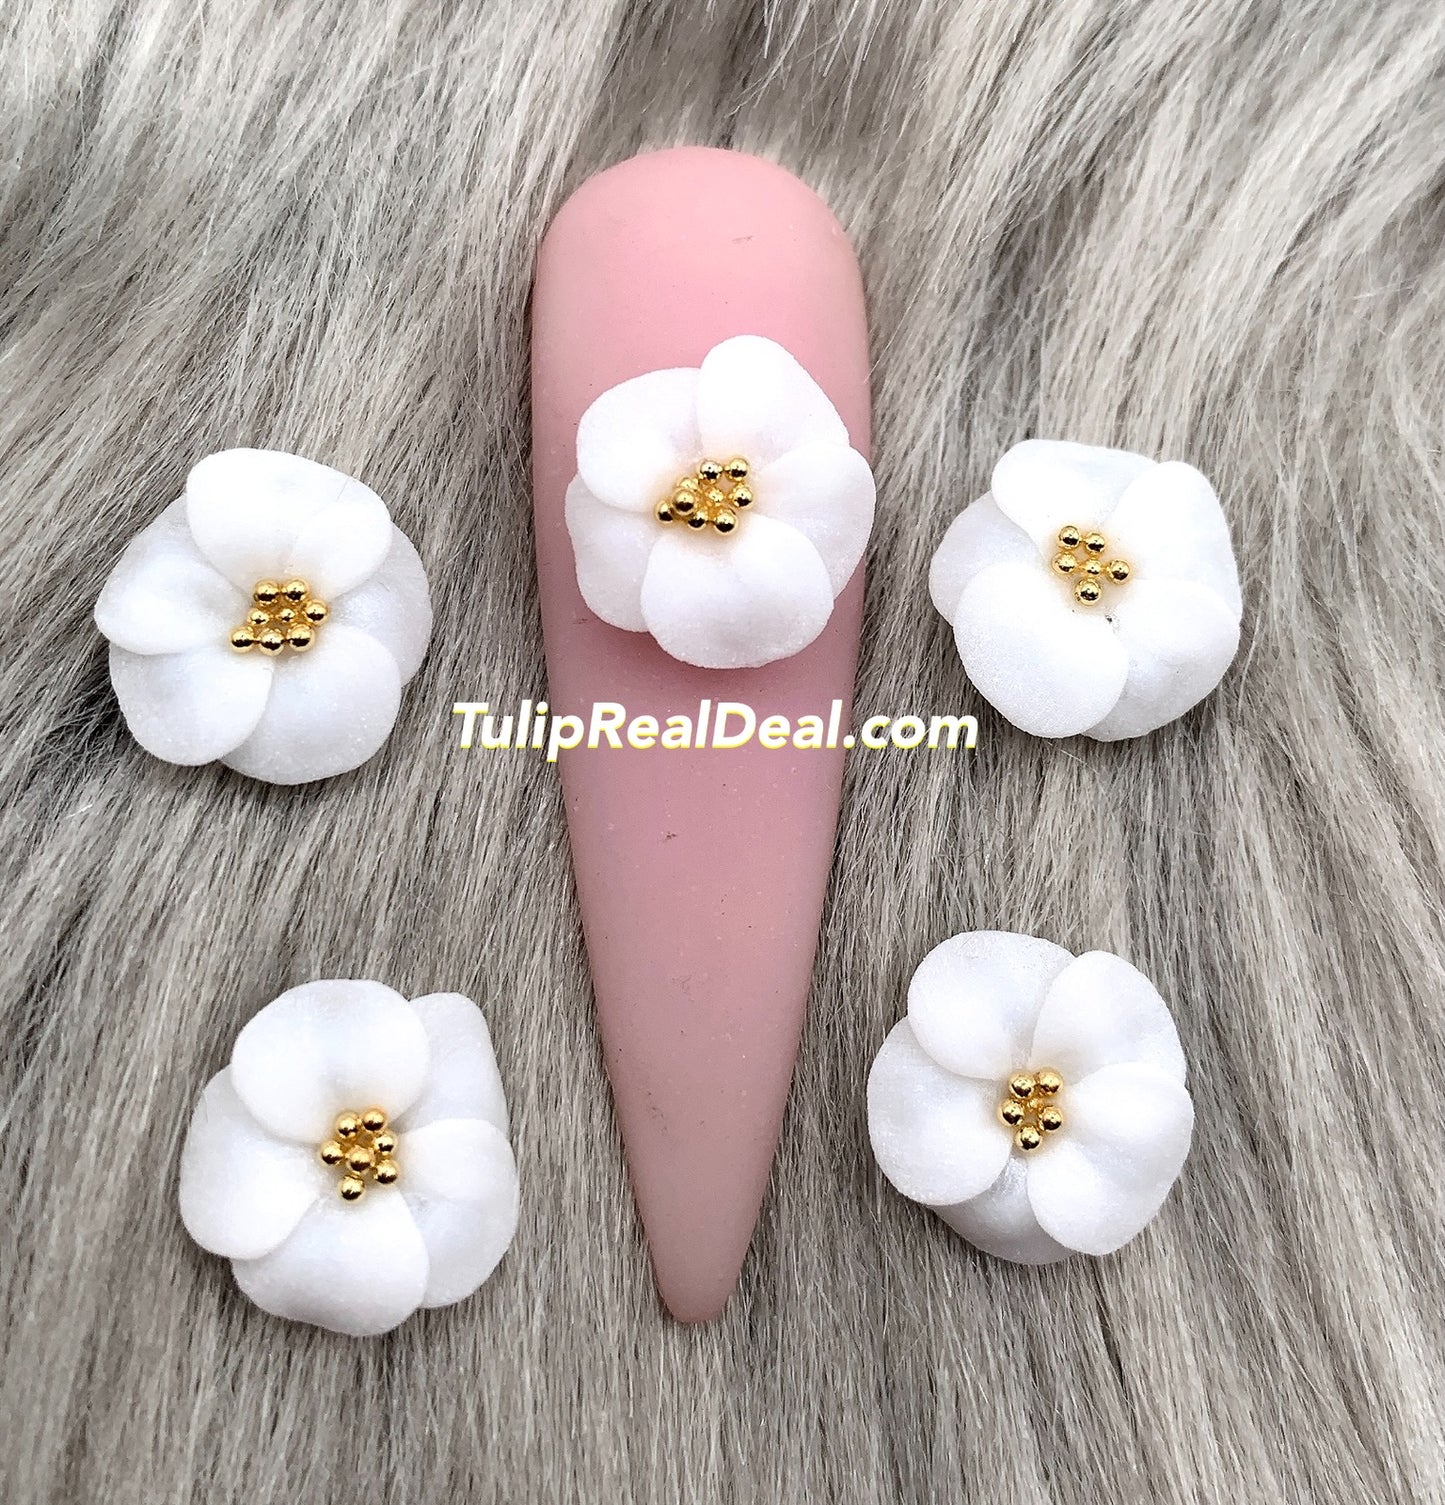 HANDMADE 3D White Acrylic Flowers 4pcs